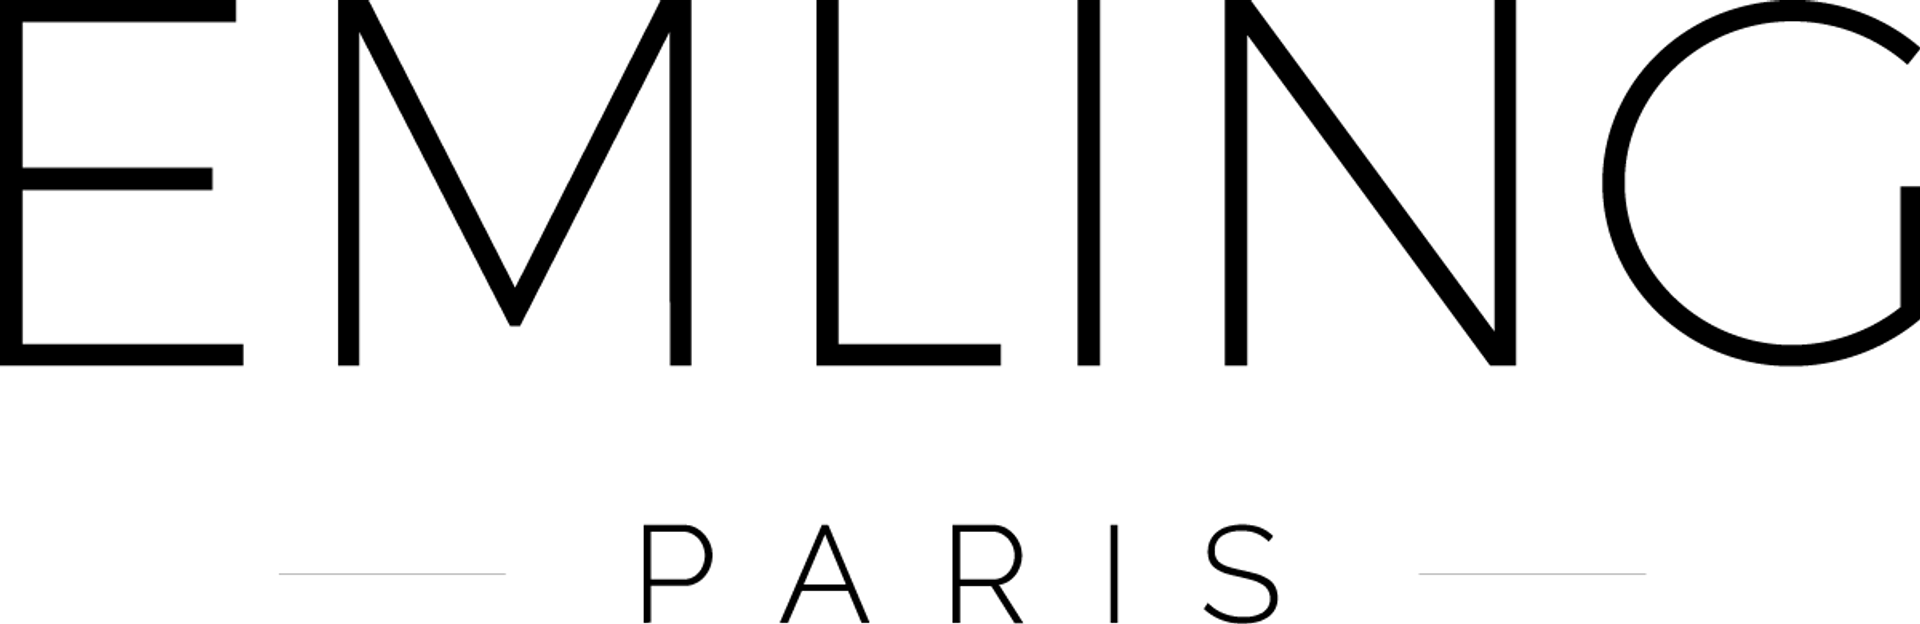 EMLING logo du catalogue